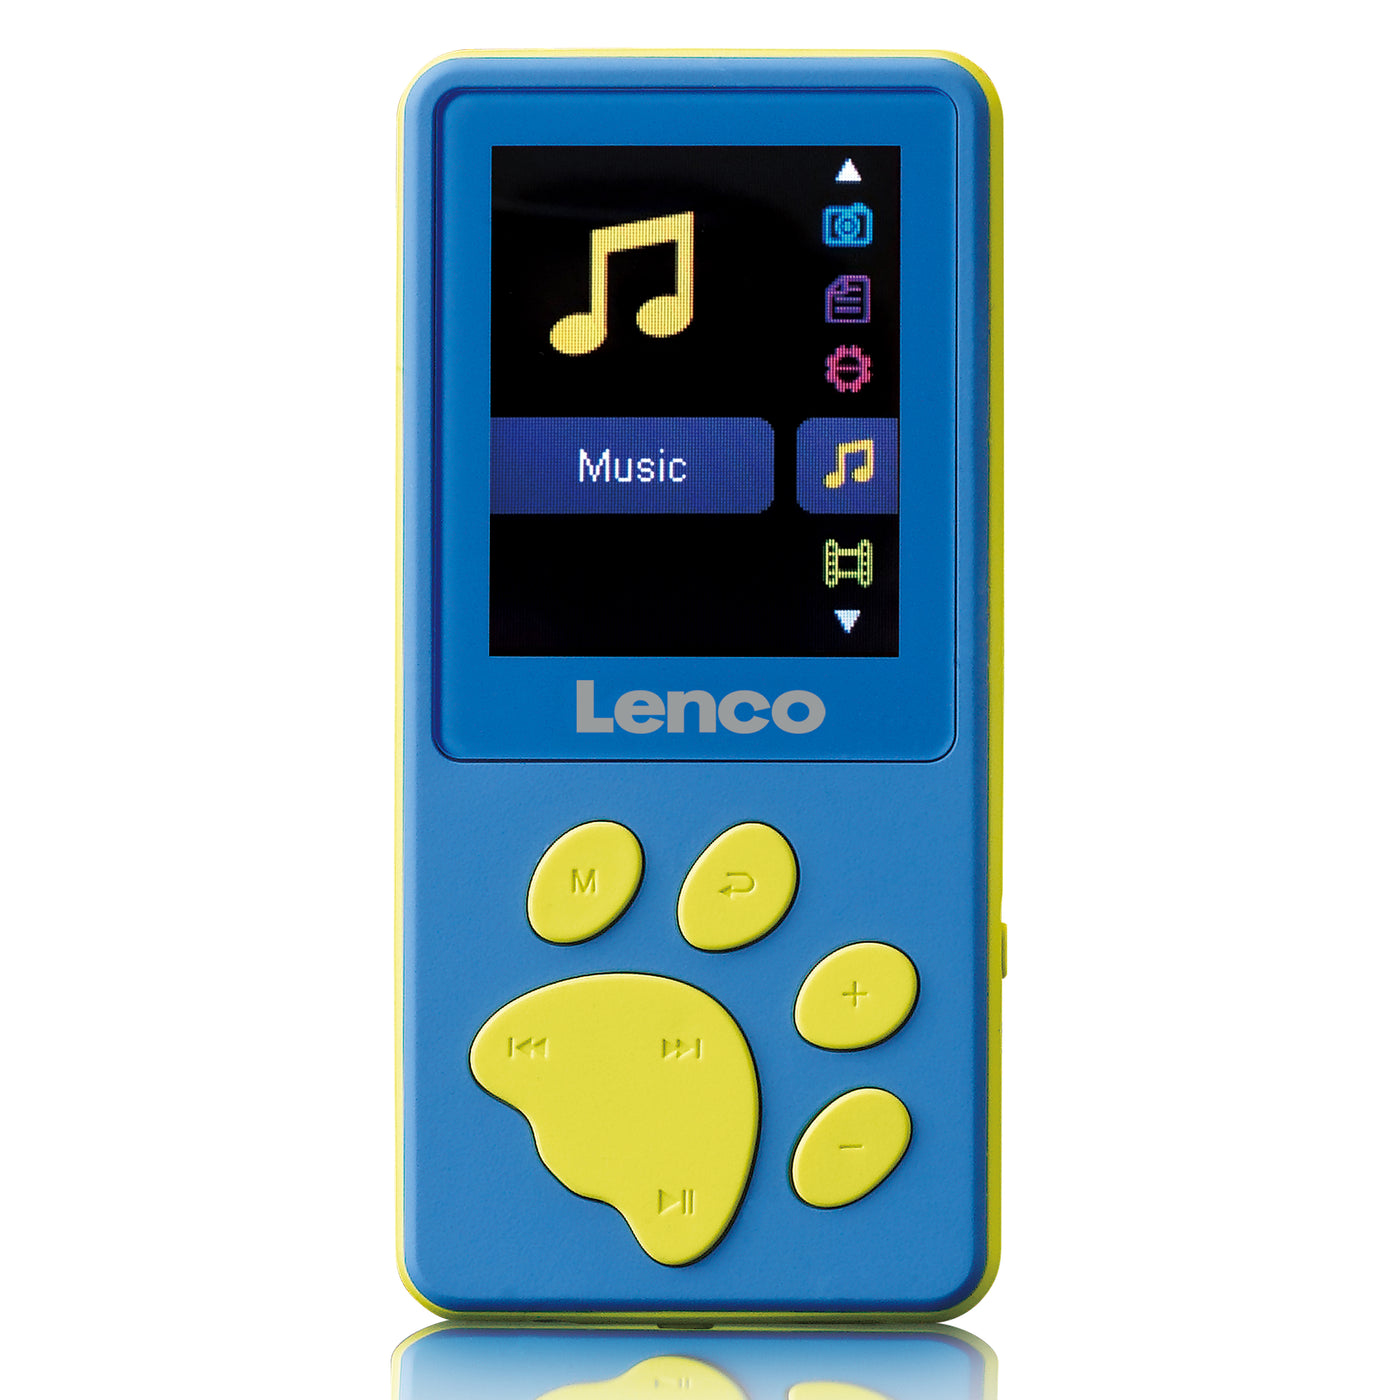 LENCO Xemio-560BU - MP3/MP4 player with 8GB memory - Blue